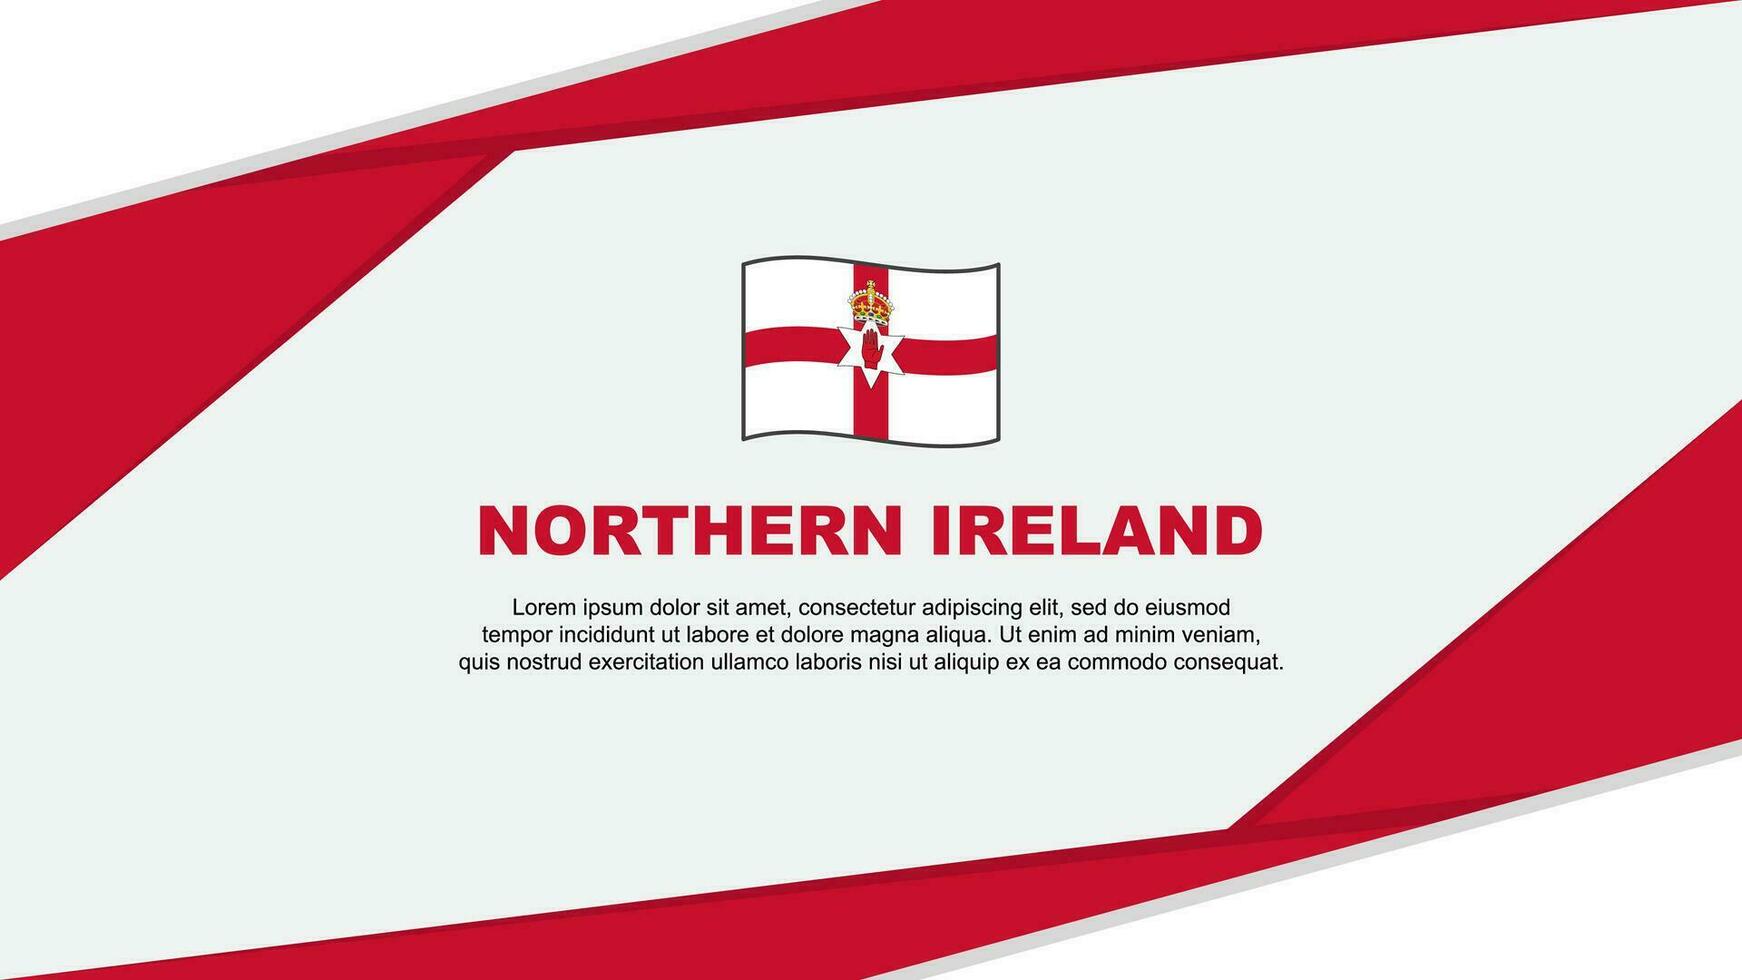 Northern Ireland Flag Abstract Background Design Template. Northern Ireland Independence Day Banner Cartoon Vector Illustration. Northern Ireland